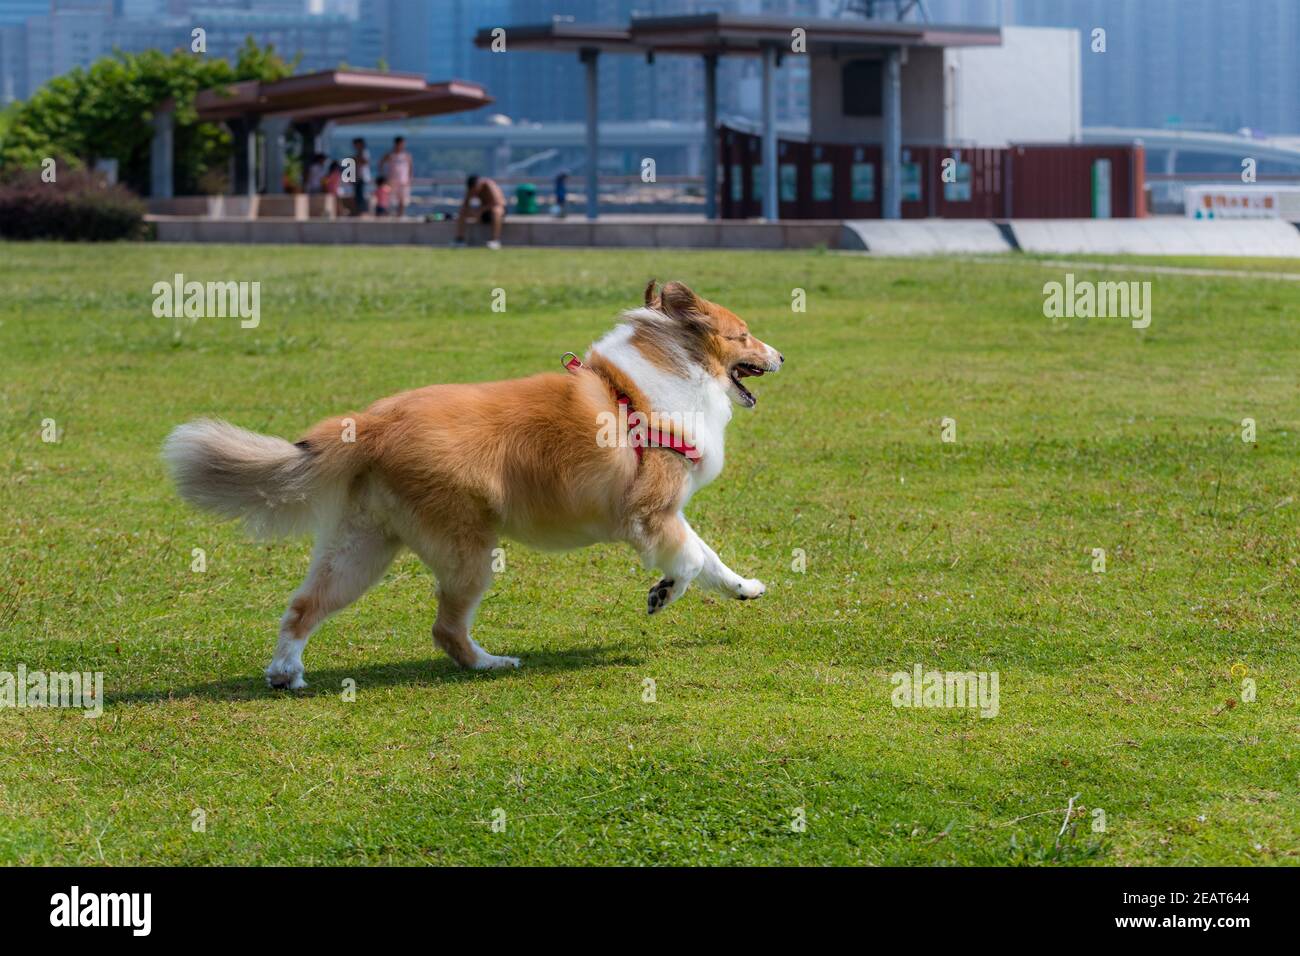 Herding dog run on green lawn Stock Photo